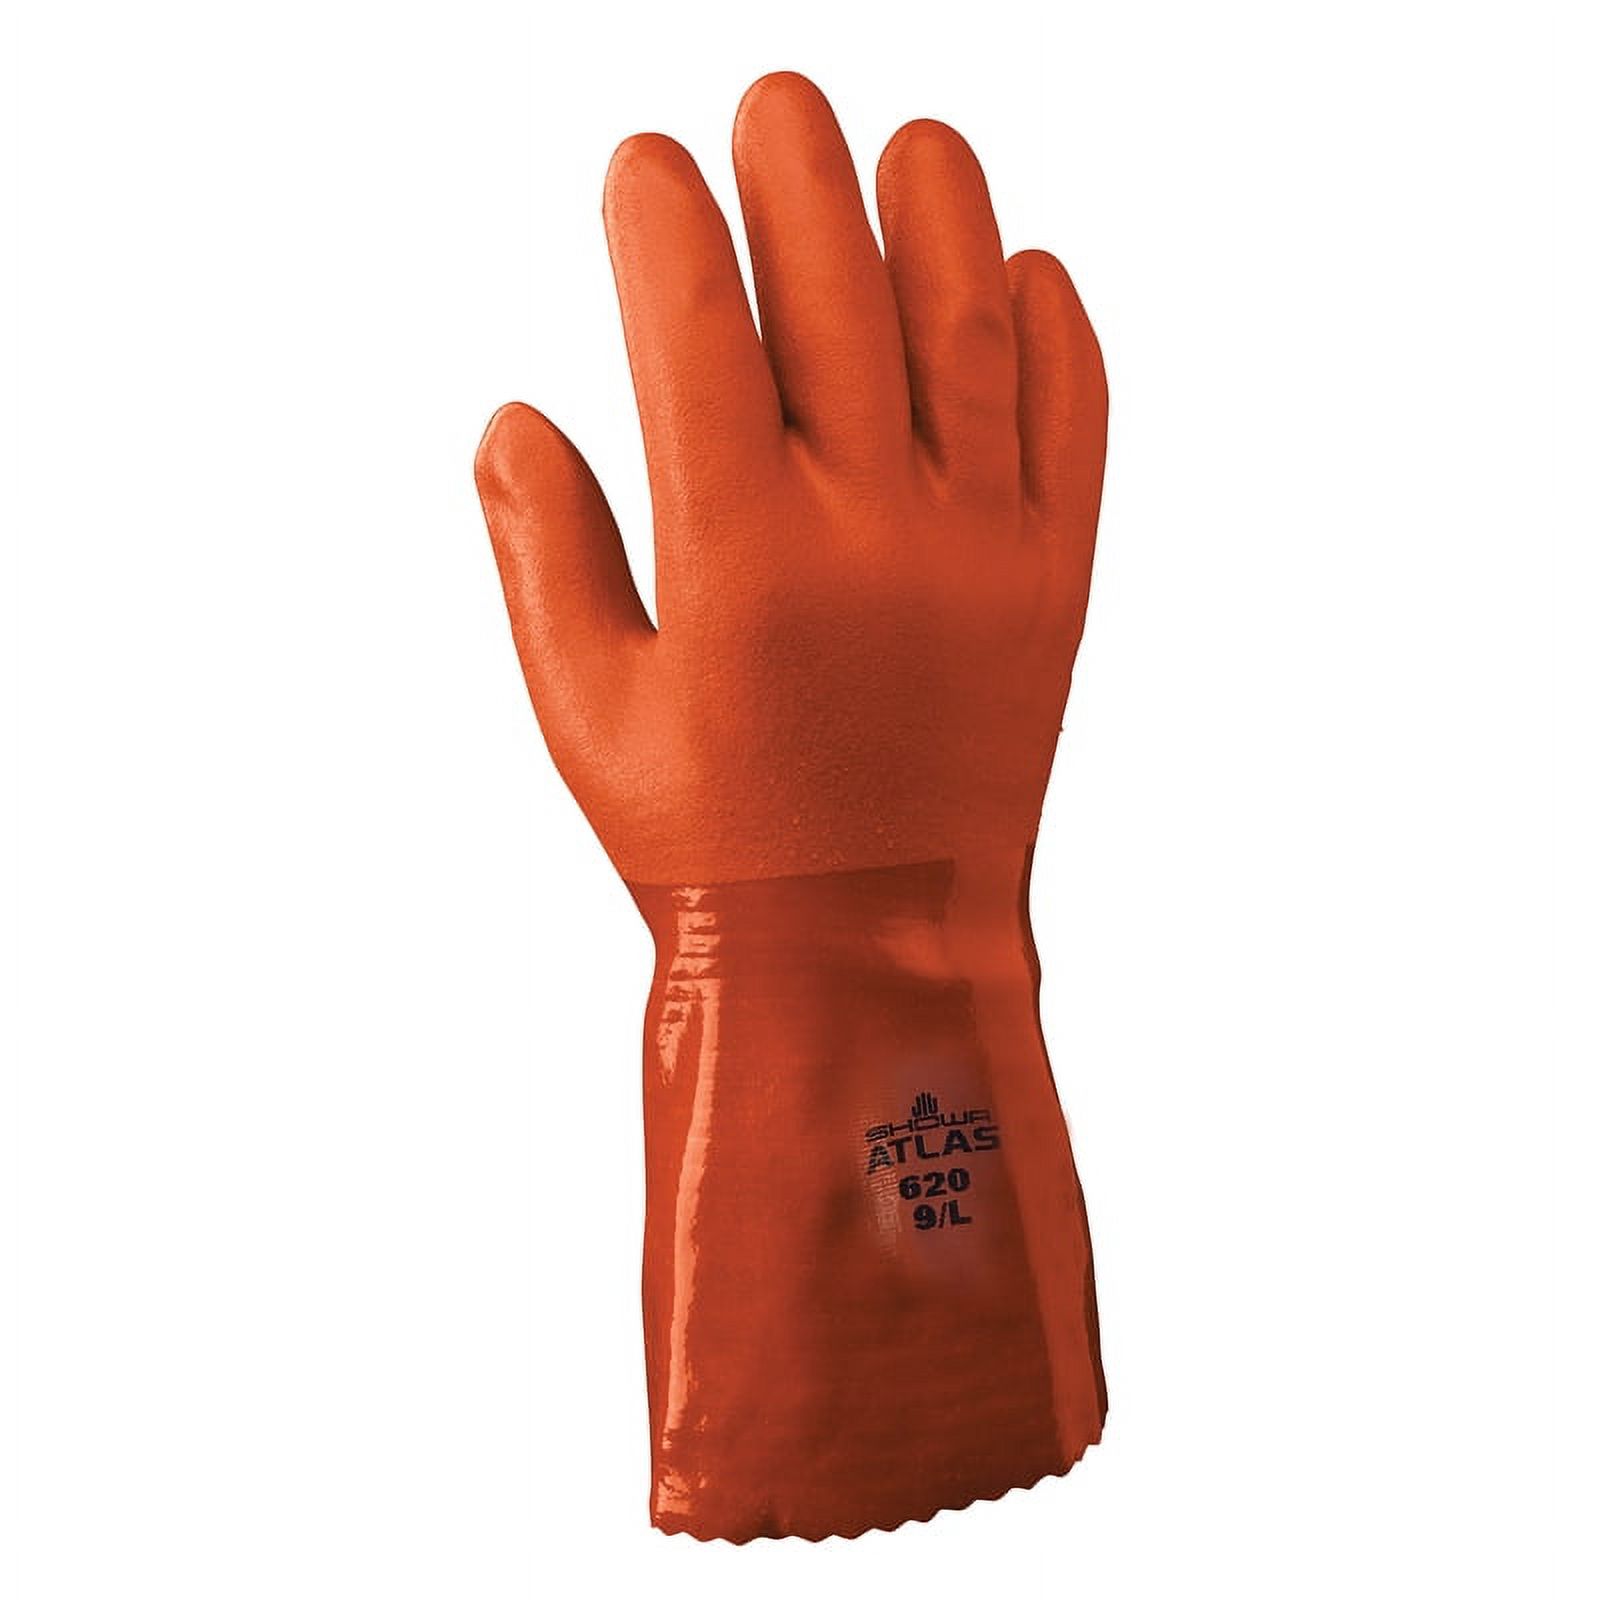 Atlas Vinylove PVC Gloves - image 2 of 6